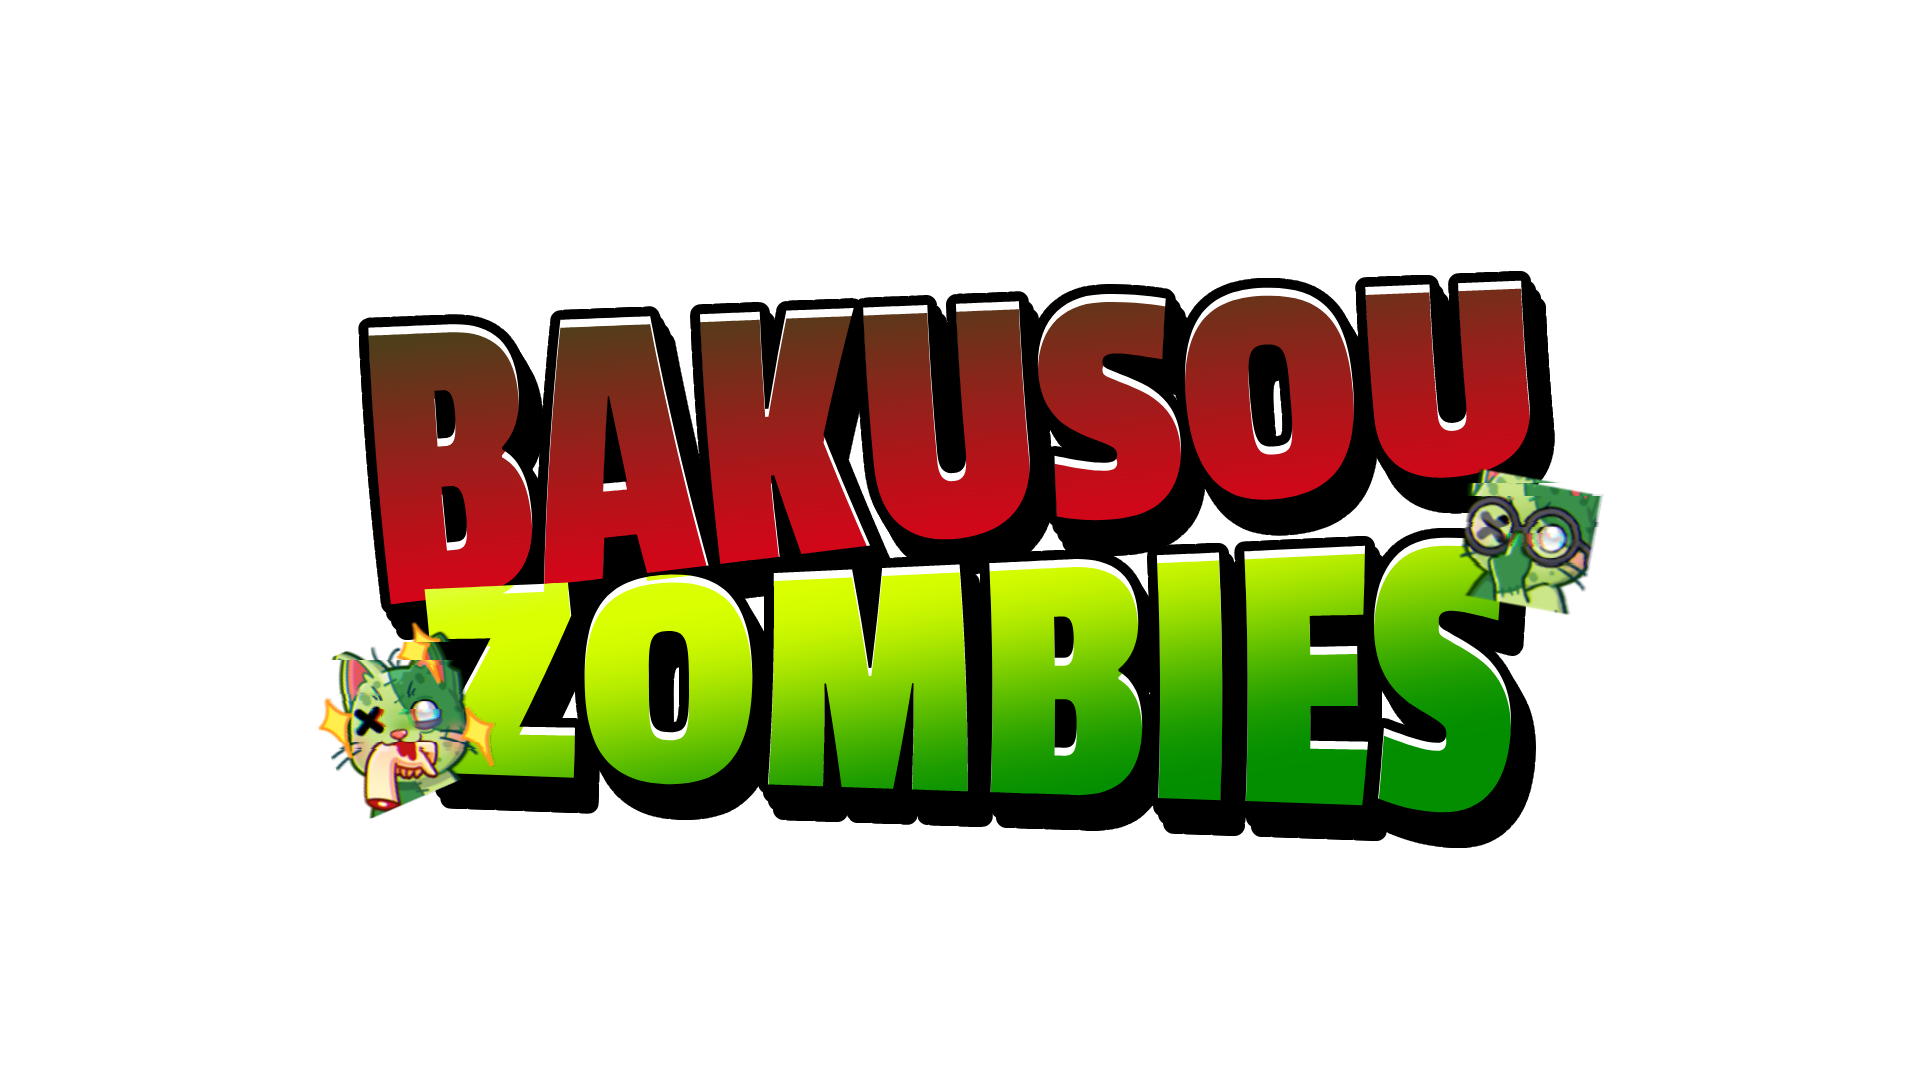 Bakusou Zombie